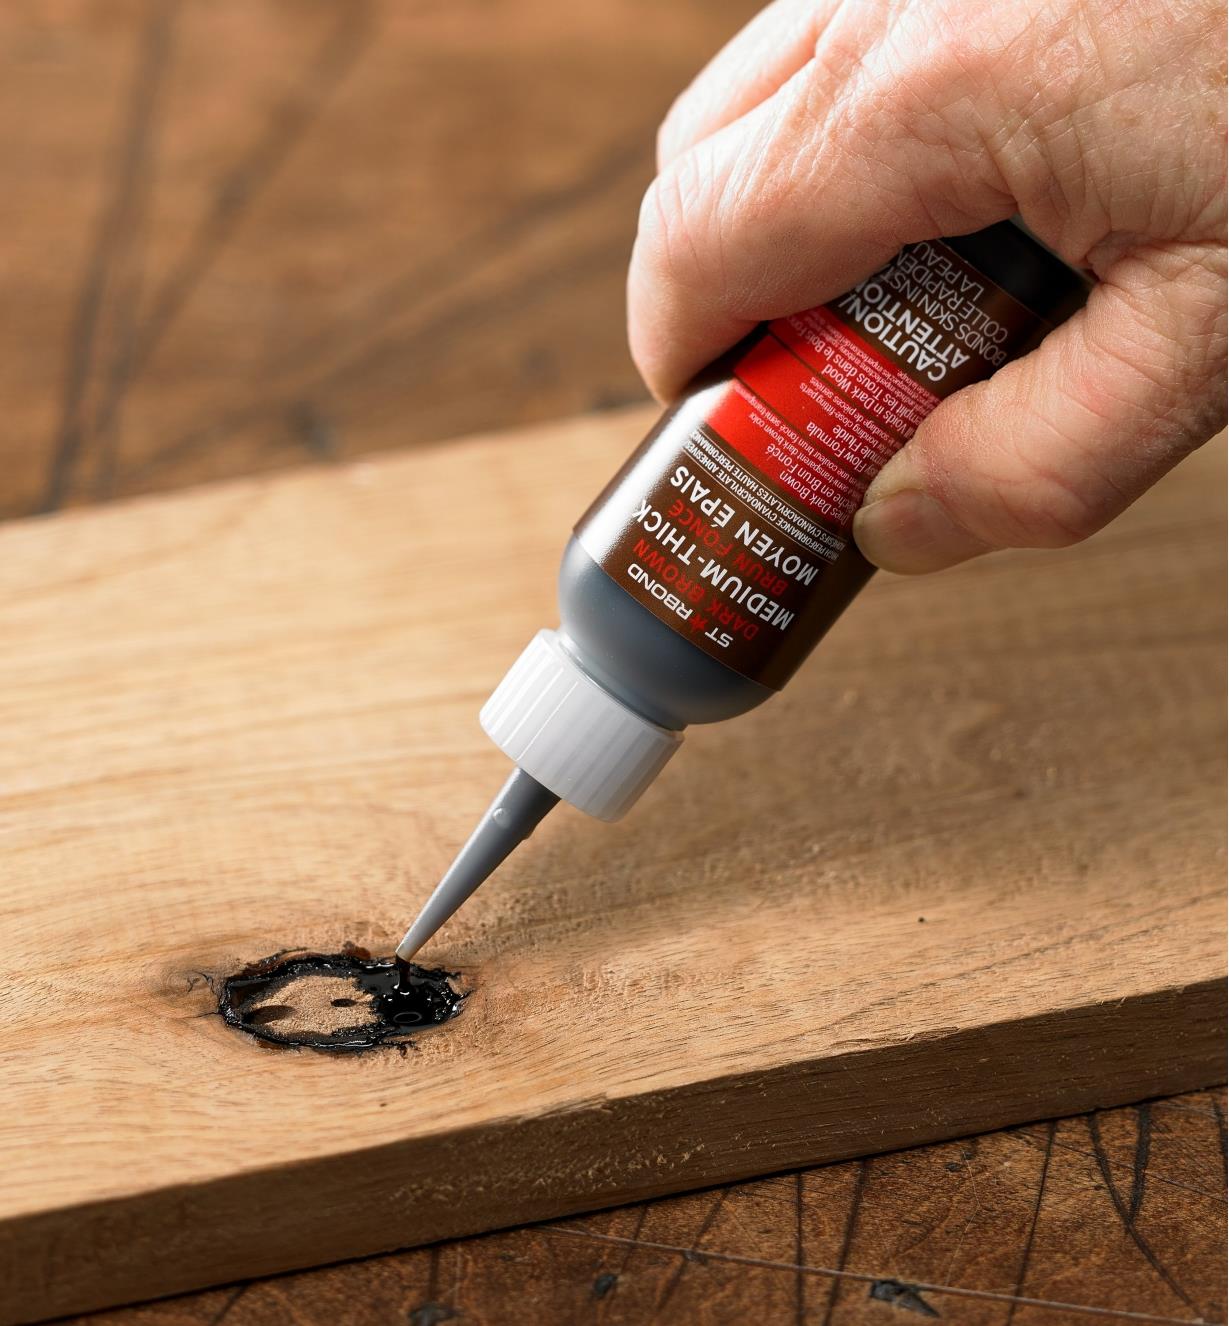 Applying Starbond dark brown CA glue to a knot in wood